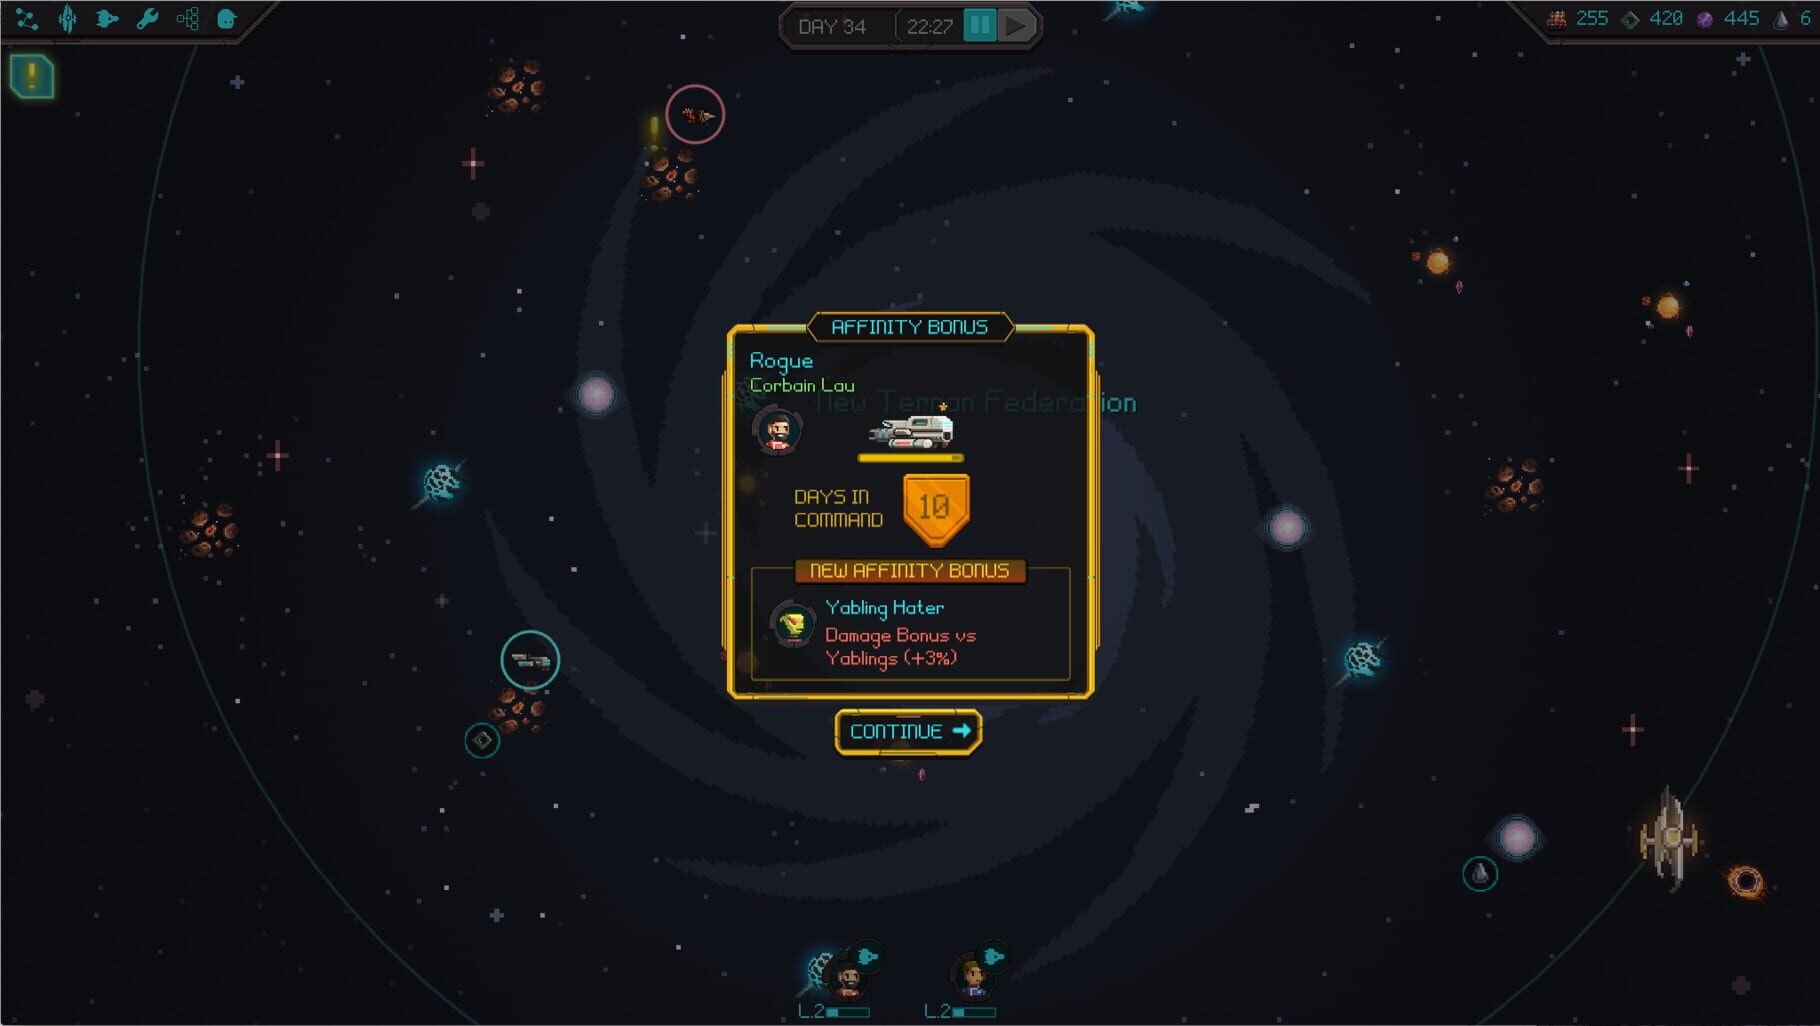 Halcyon 6: Starbase Commander screenshot